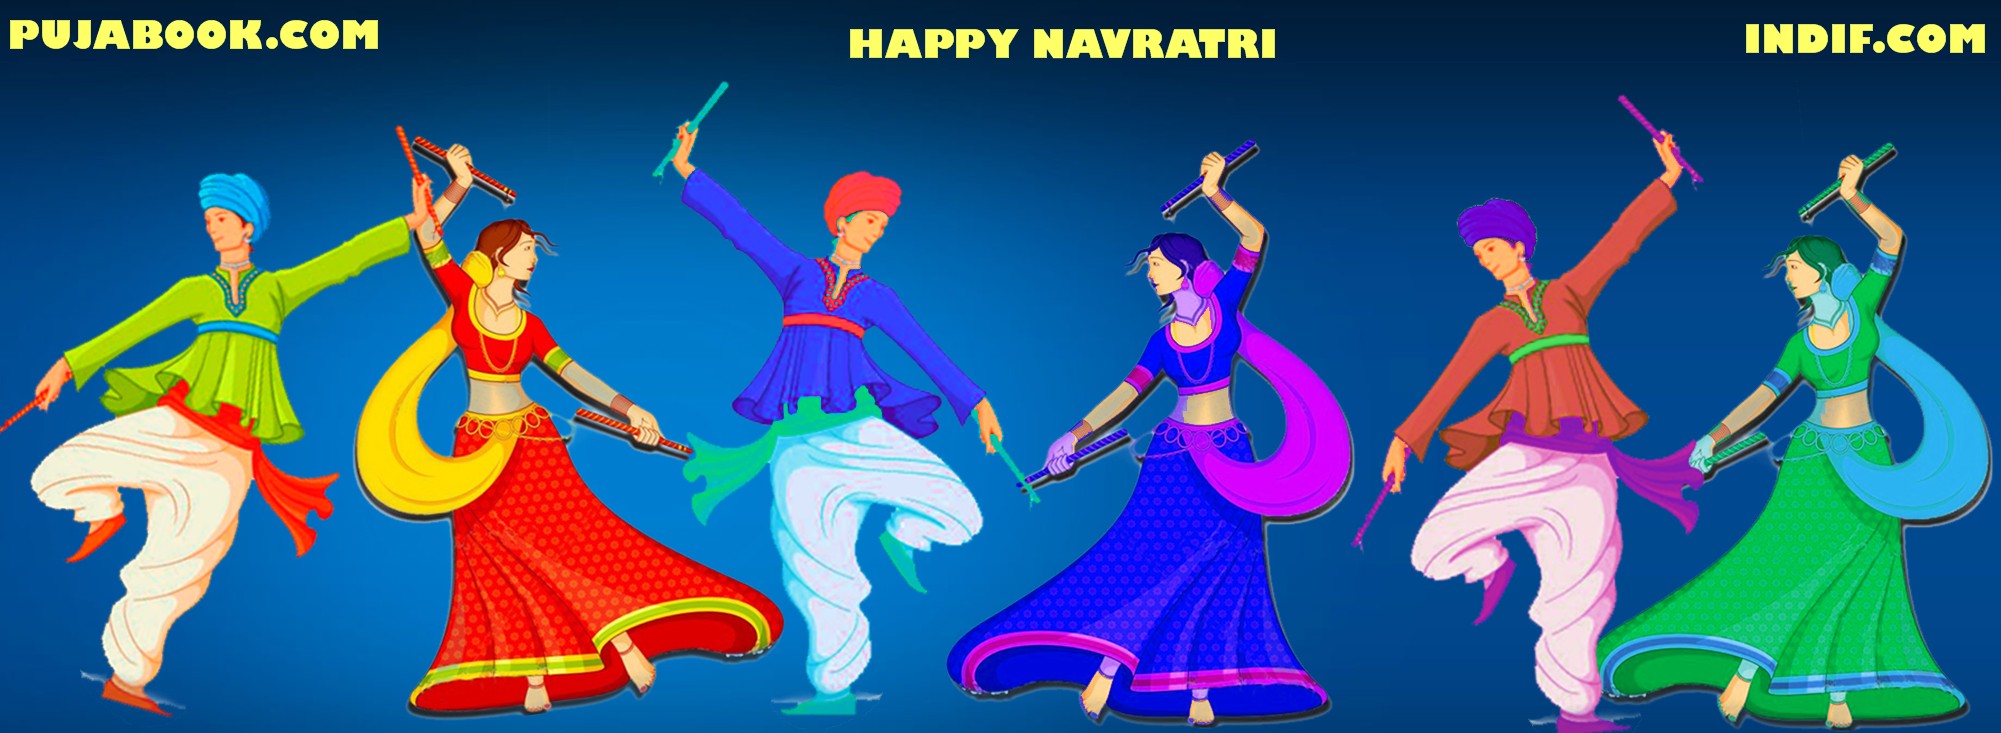 Dandiya - Garba Dance at Navratri Festival